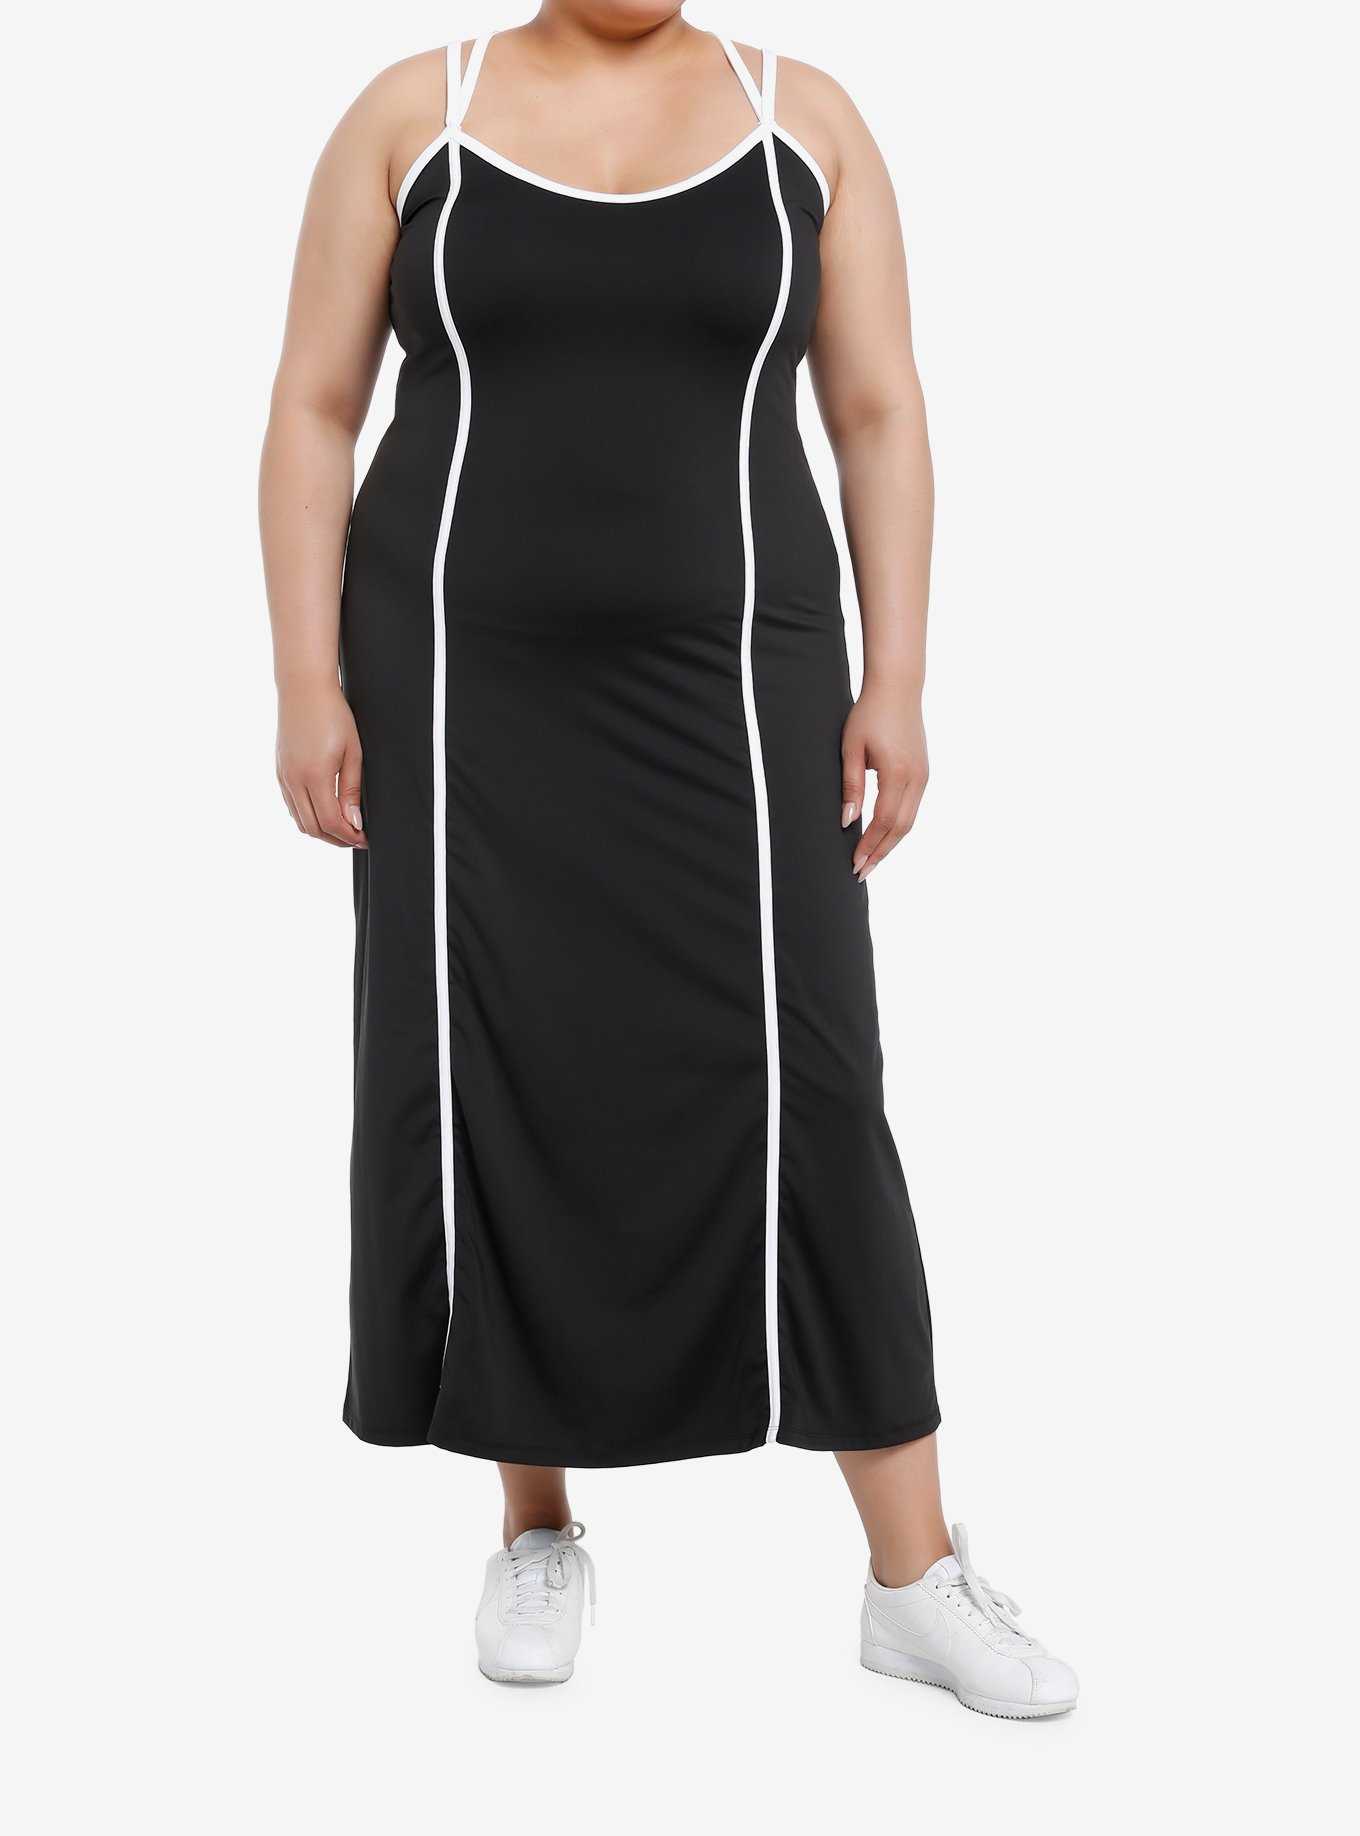 Sweet Society Black & White Stripe Slim Fit Maxi Dress Plus Size, , hi-res